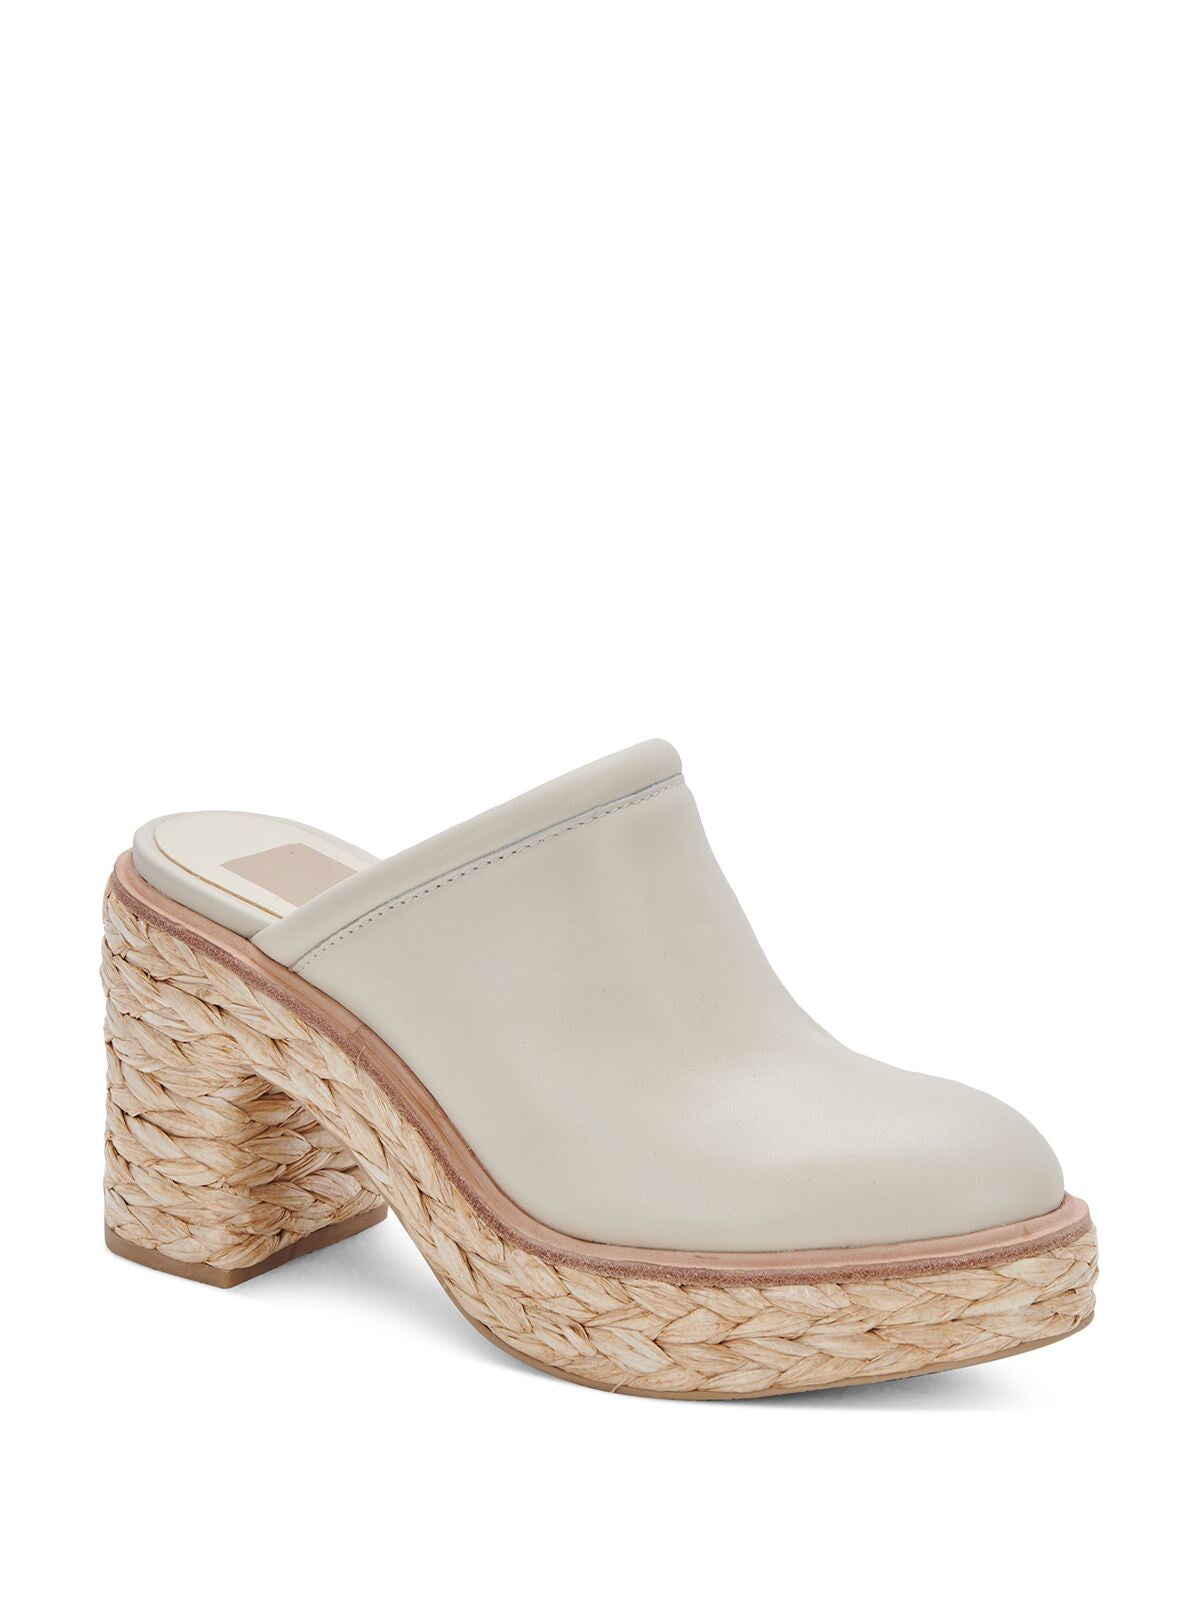 DOLCE VITA Womens Ivory 1" Espadrille Platform Padded Camdin Round Toe Block Heel Slip On Leather Clogs Shoes 7.5 M